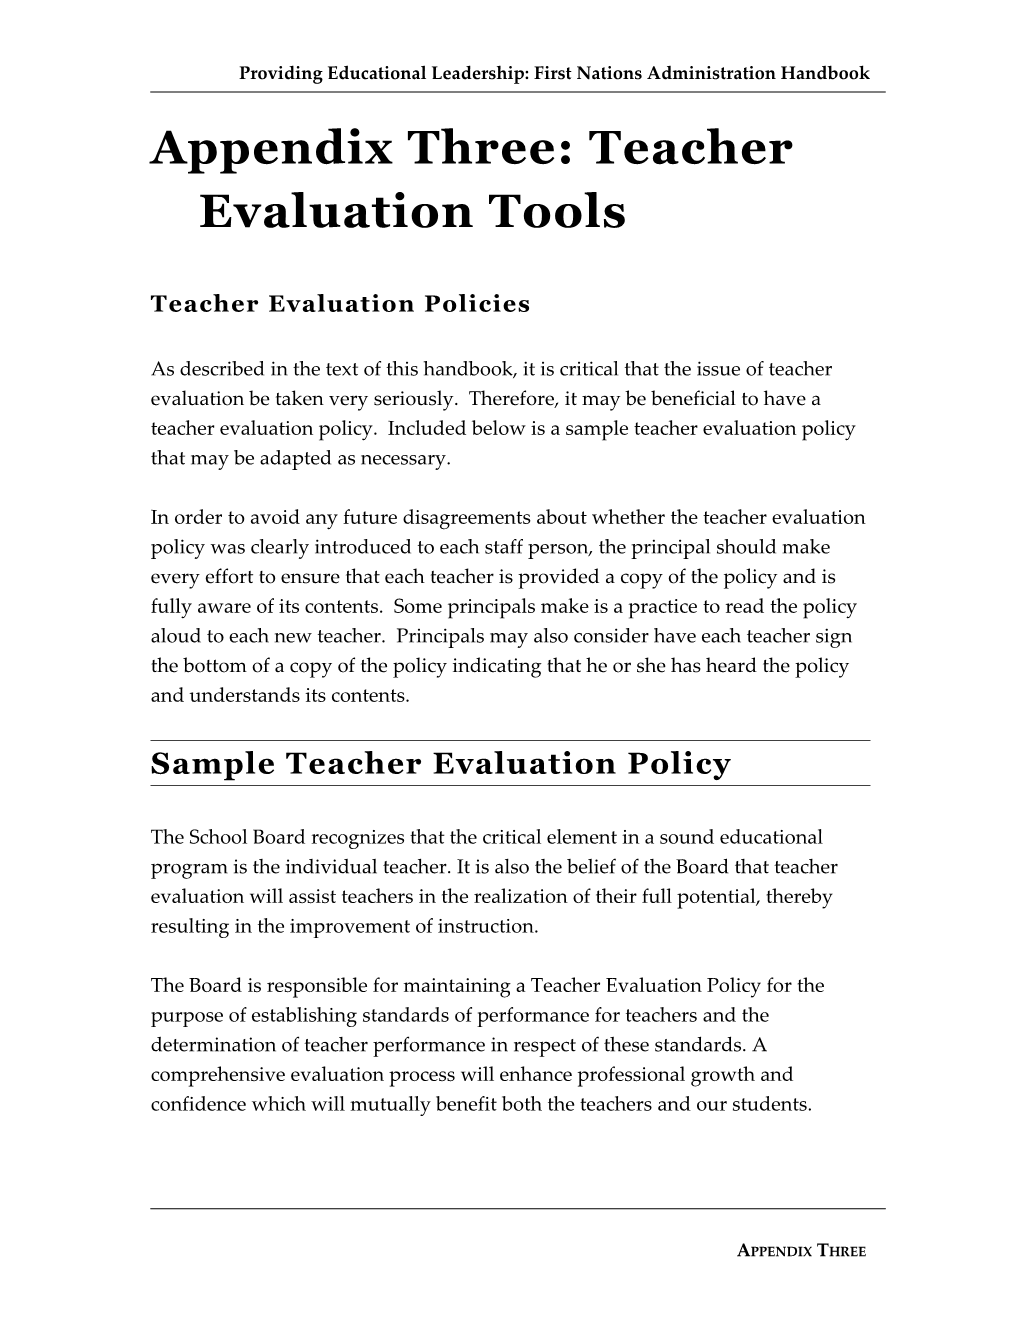 Appendix Three: Teacher Evaluation Tools